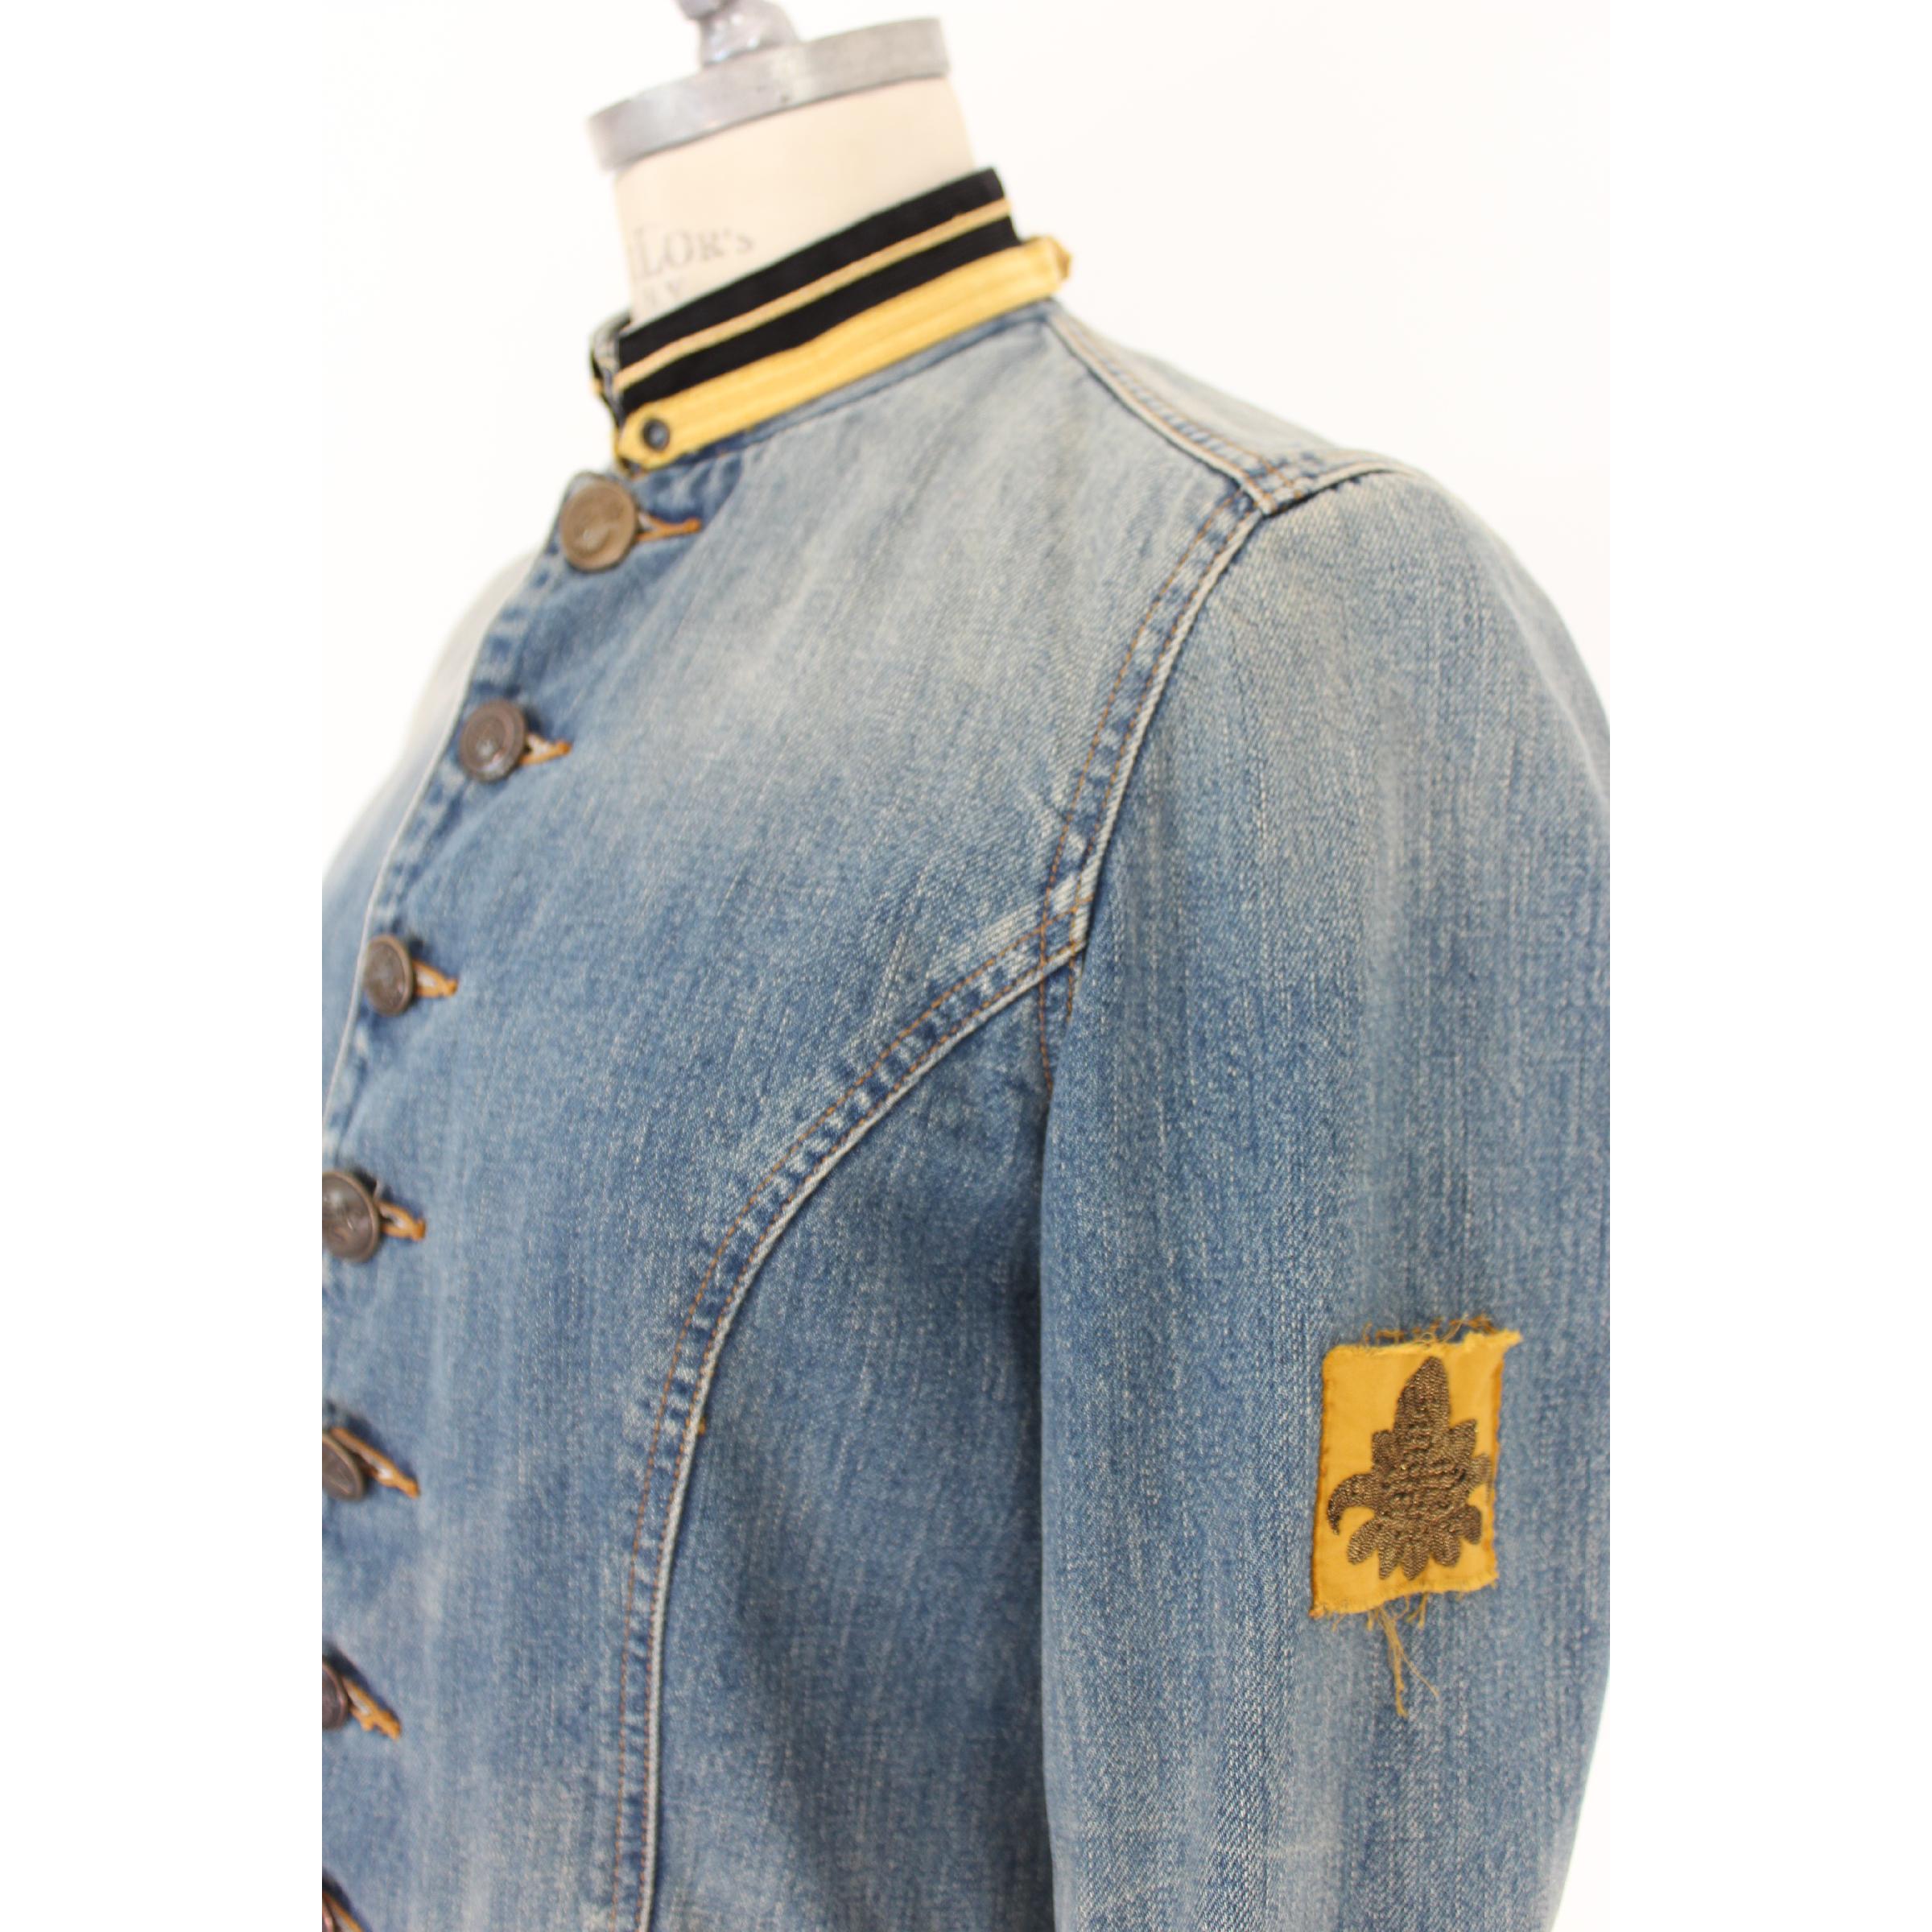 Ralph Lauren Blue Jeans Flared Denim Jacket Stand-Up Collar Golden Insert 1990s 1